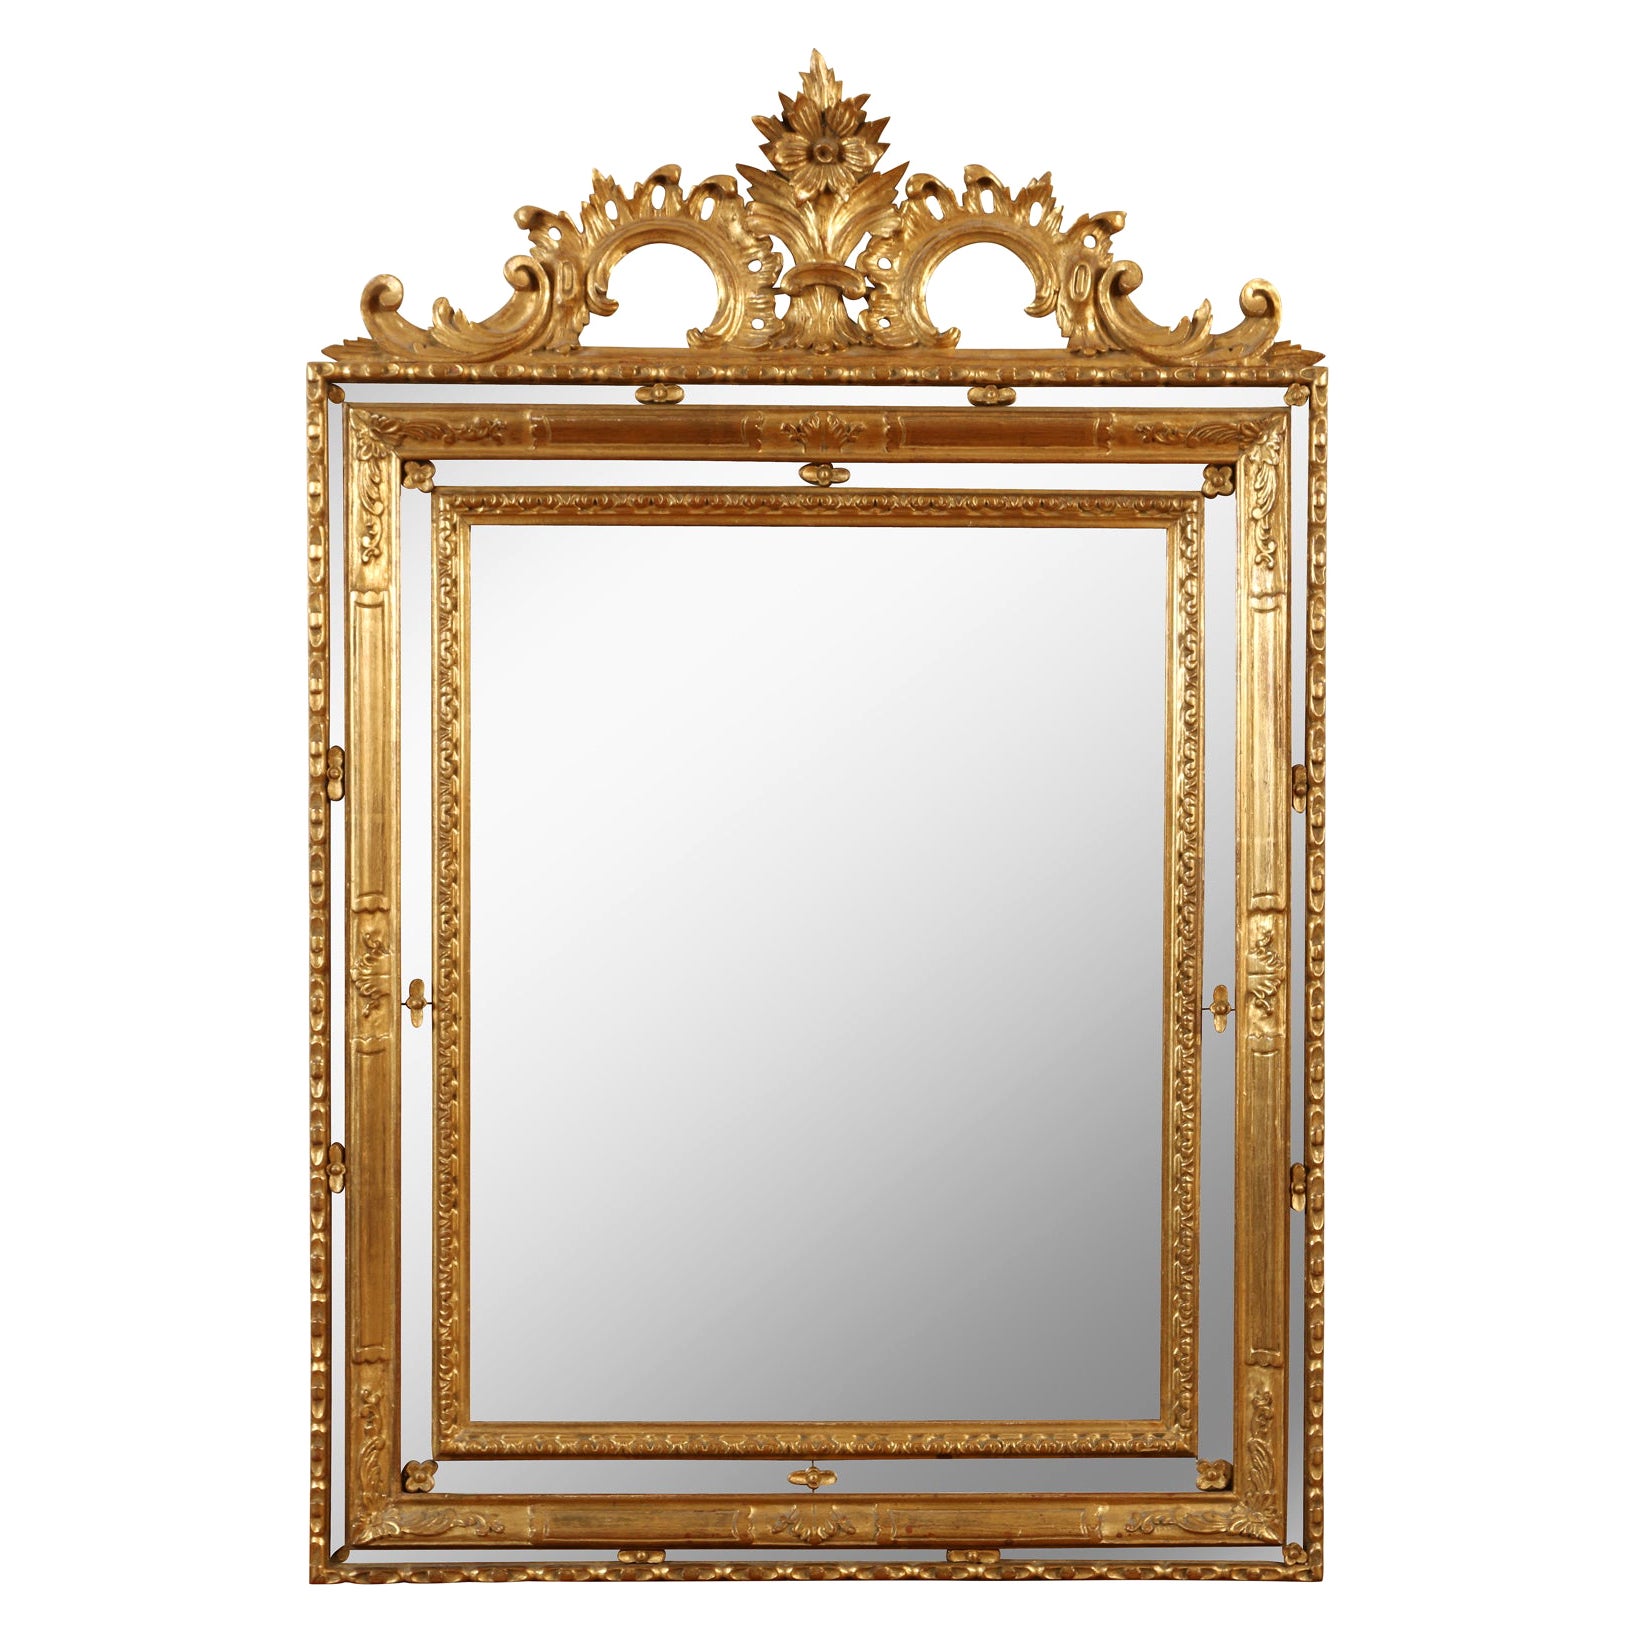 Giltwood Regence Style Triple Frame Mirror For Sale